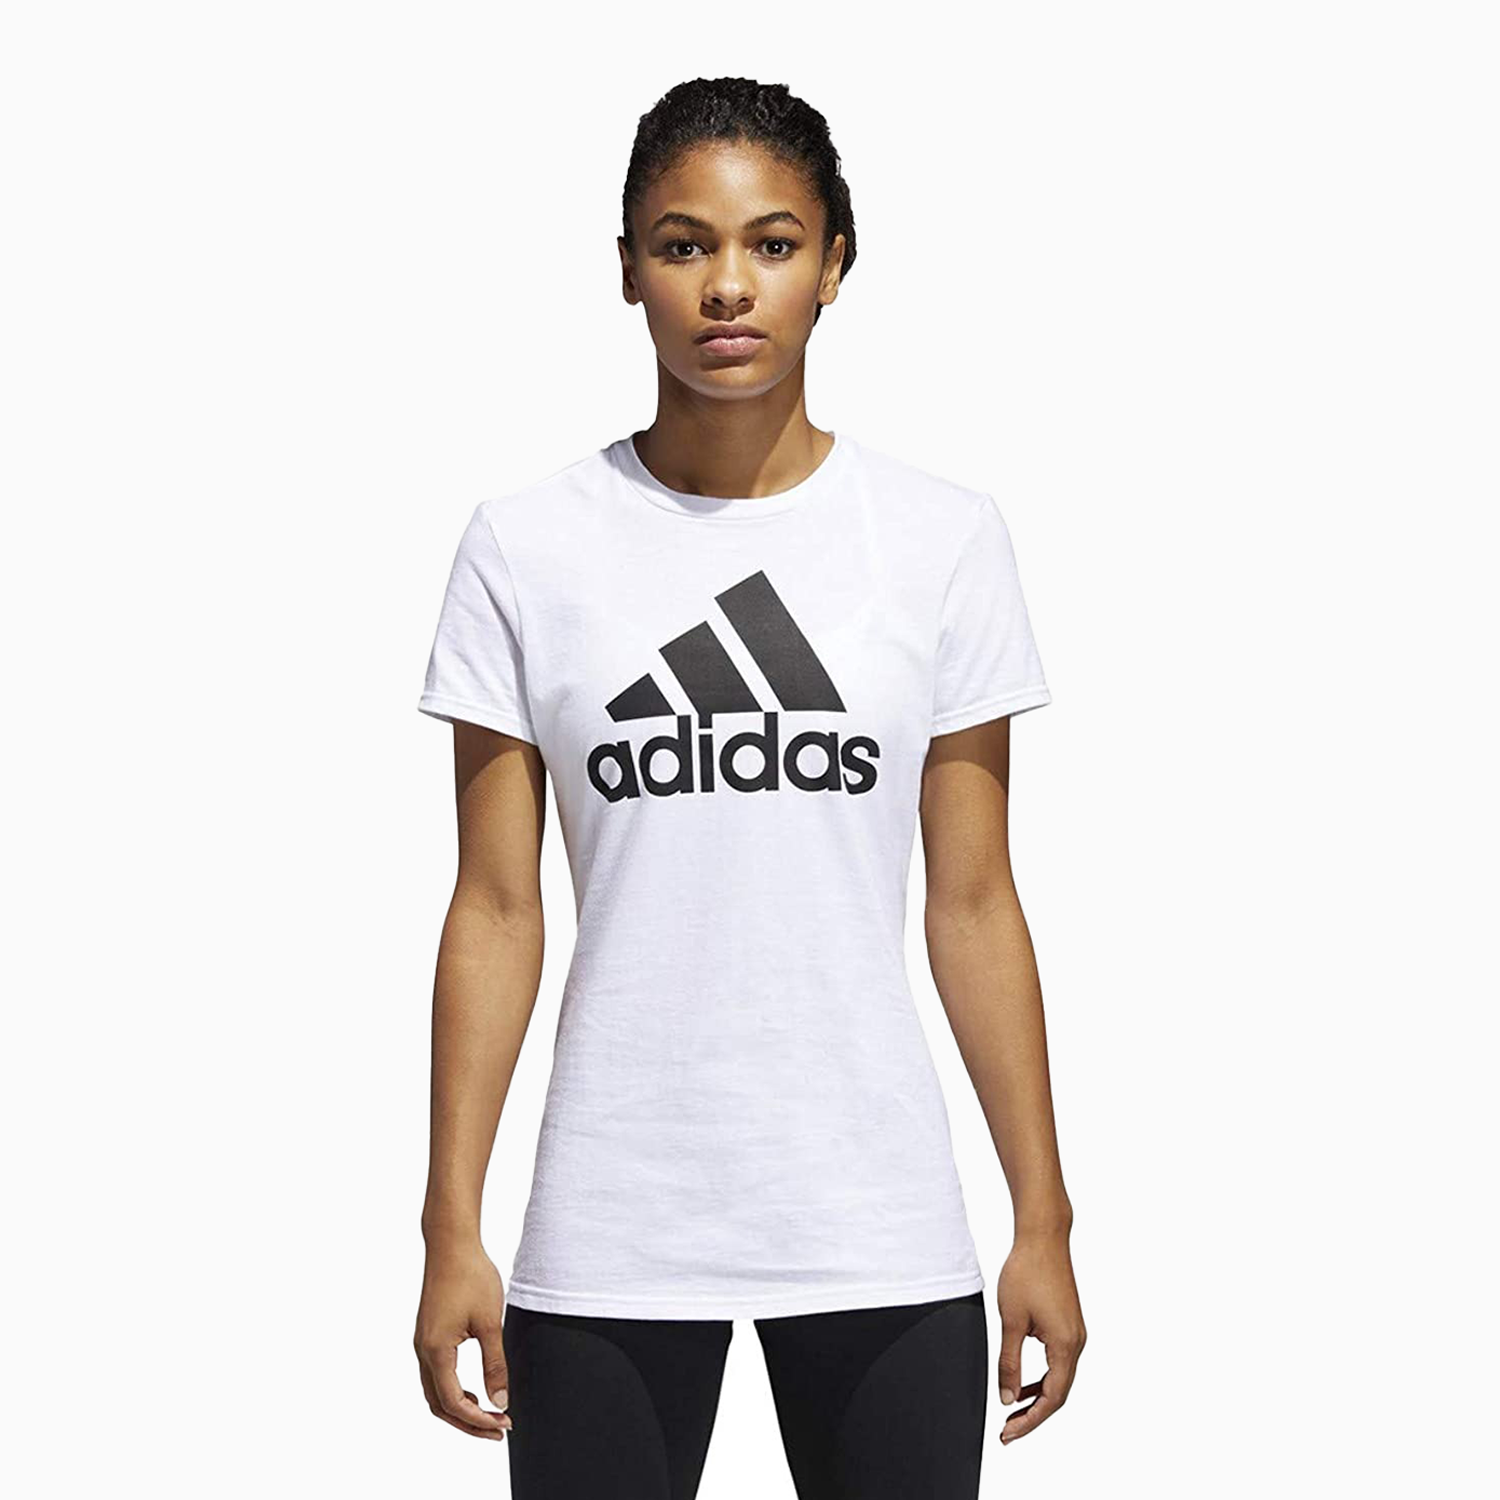 adidas-womens-badge-of-sport-t-shirt-cw9854